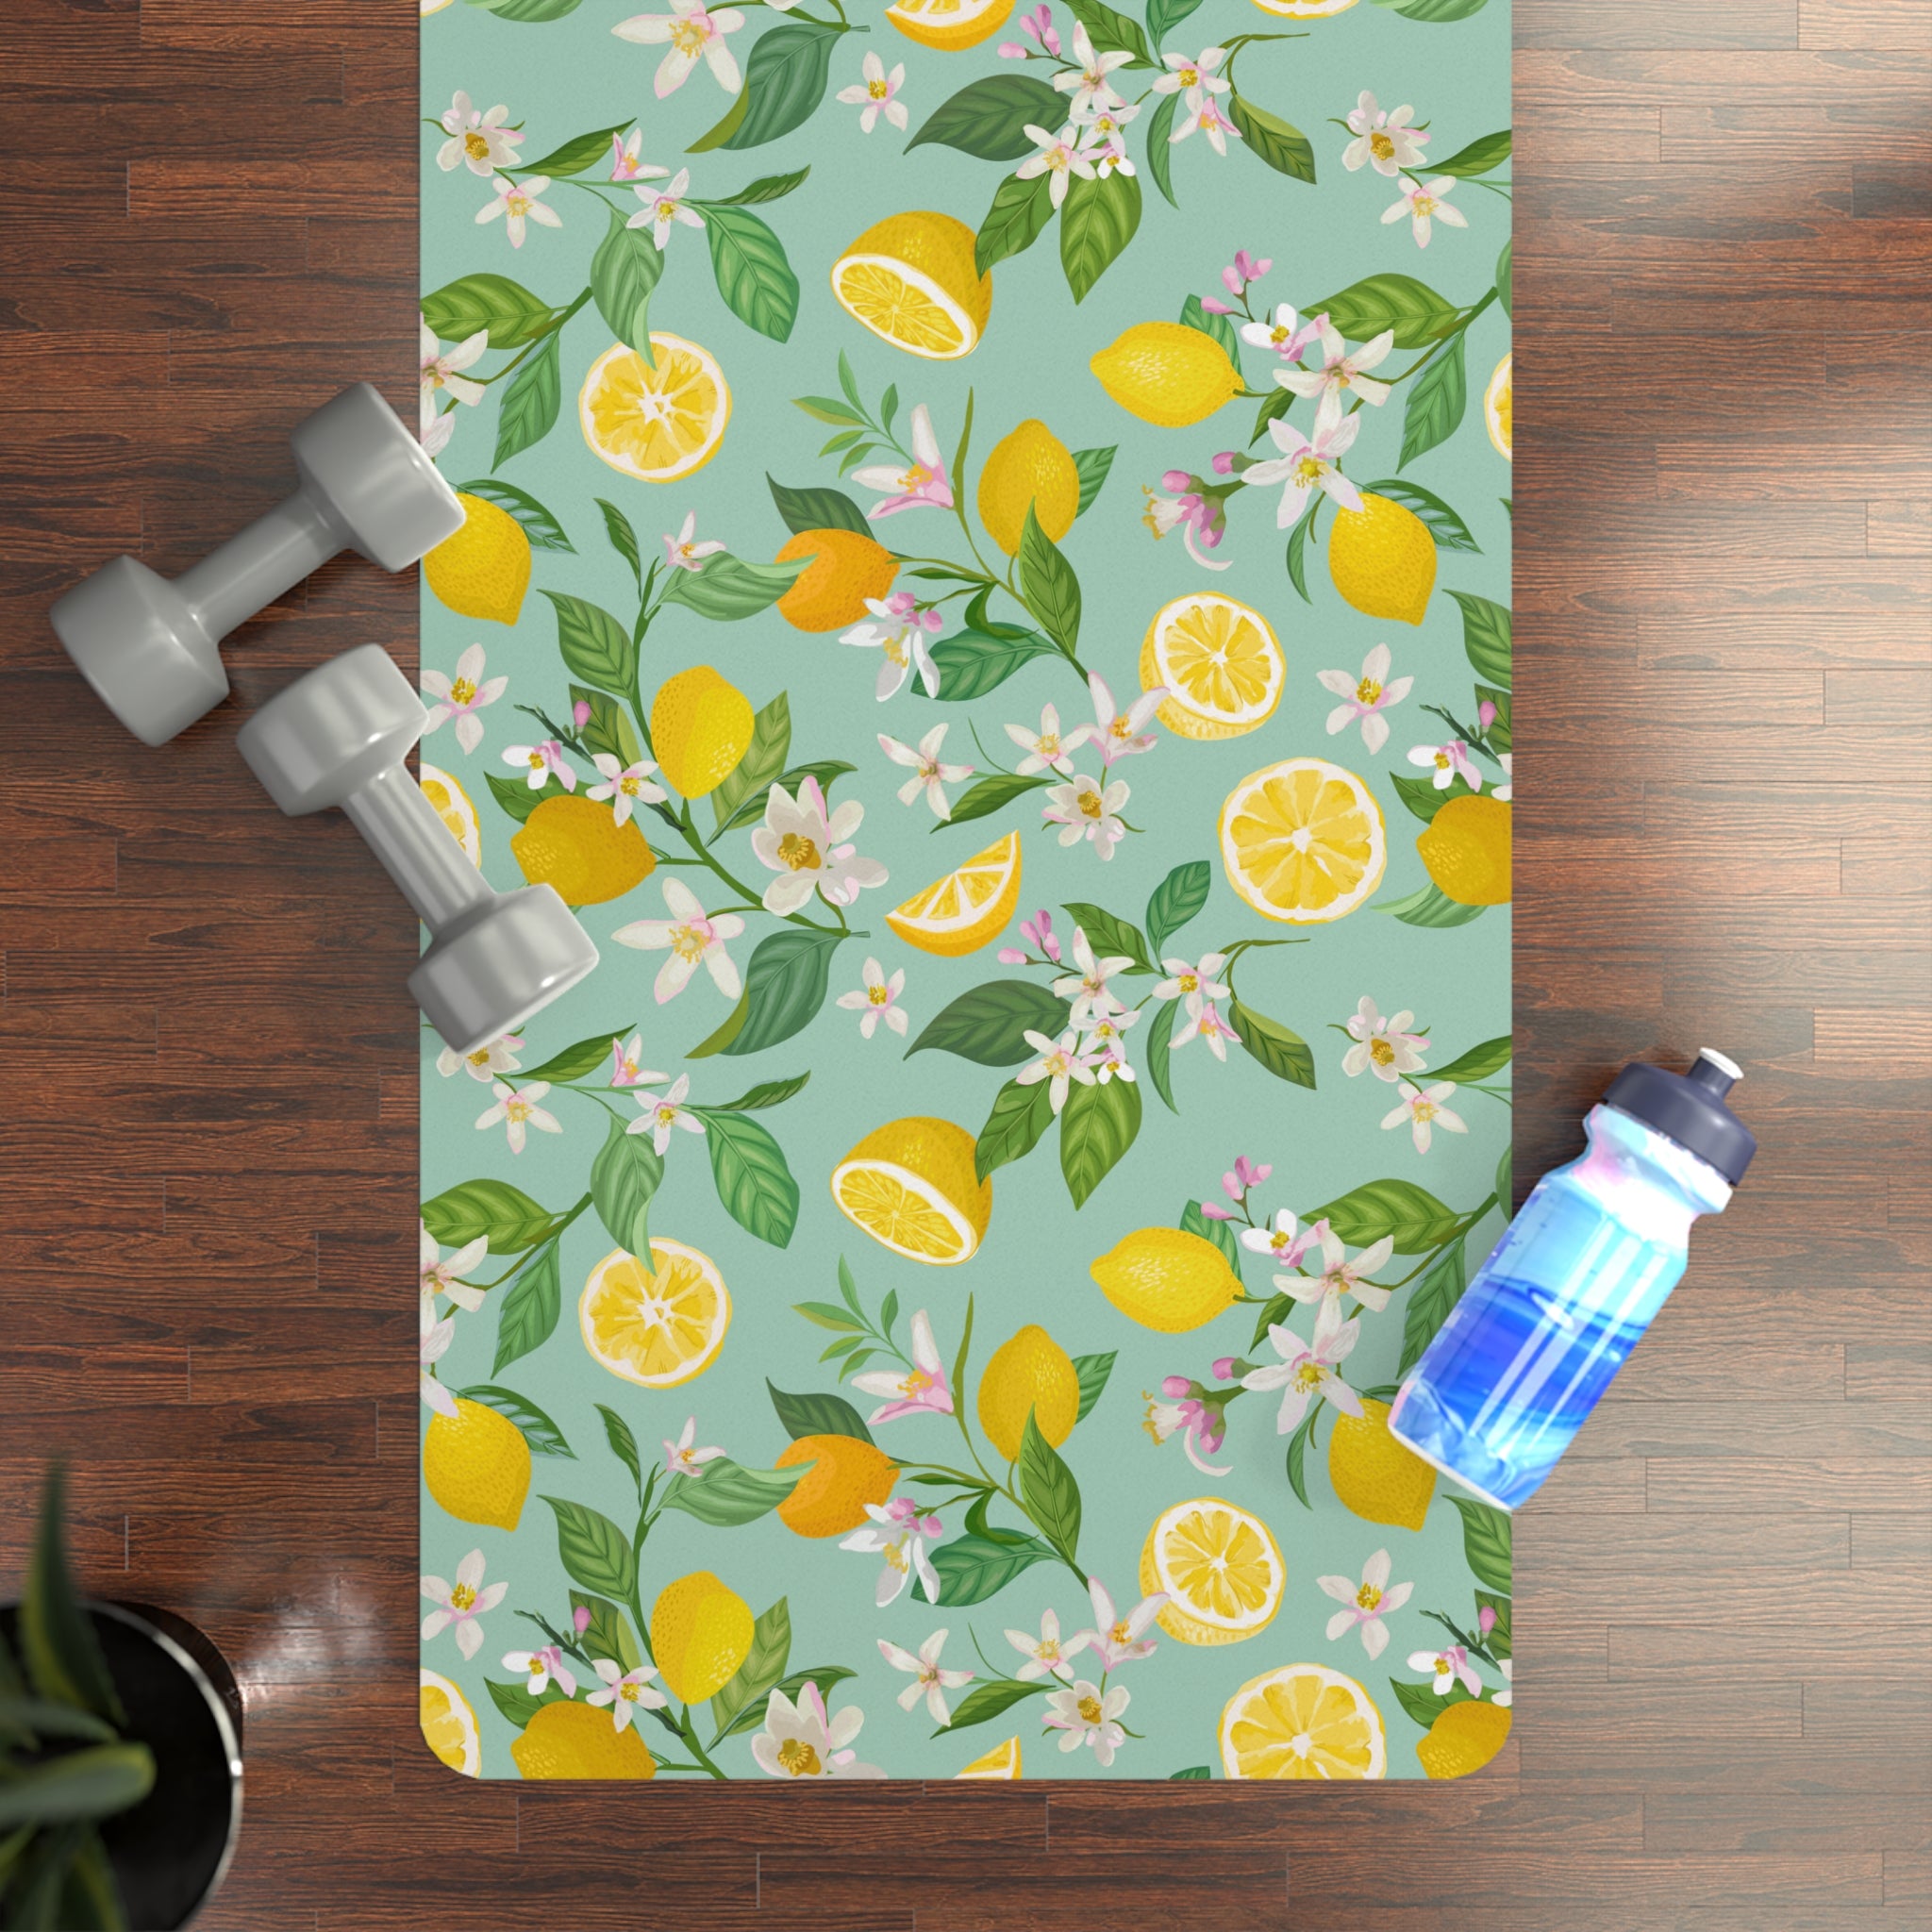 Lemons and Flowers Rubber Yoga Mat